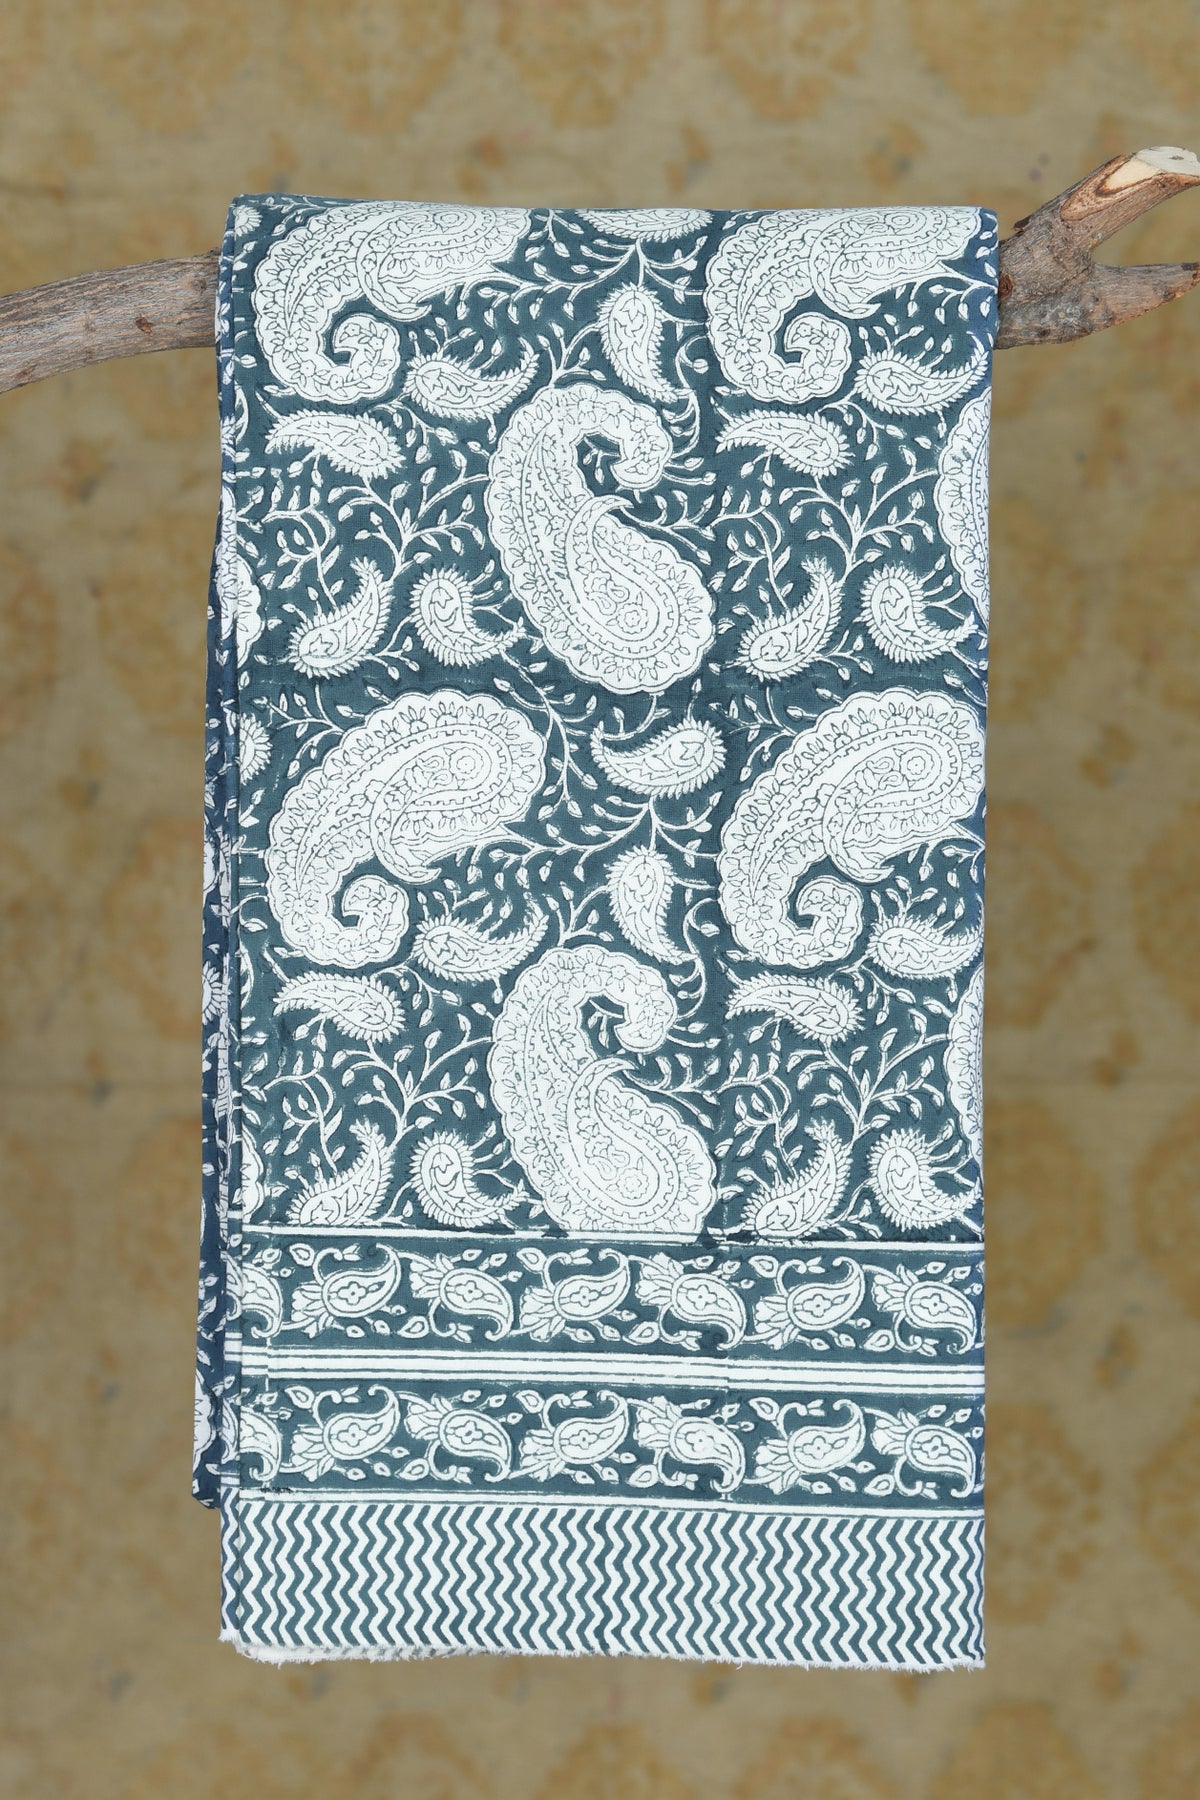 Paisley Design Grey Printed Cotton Double Bedspread